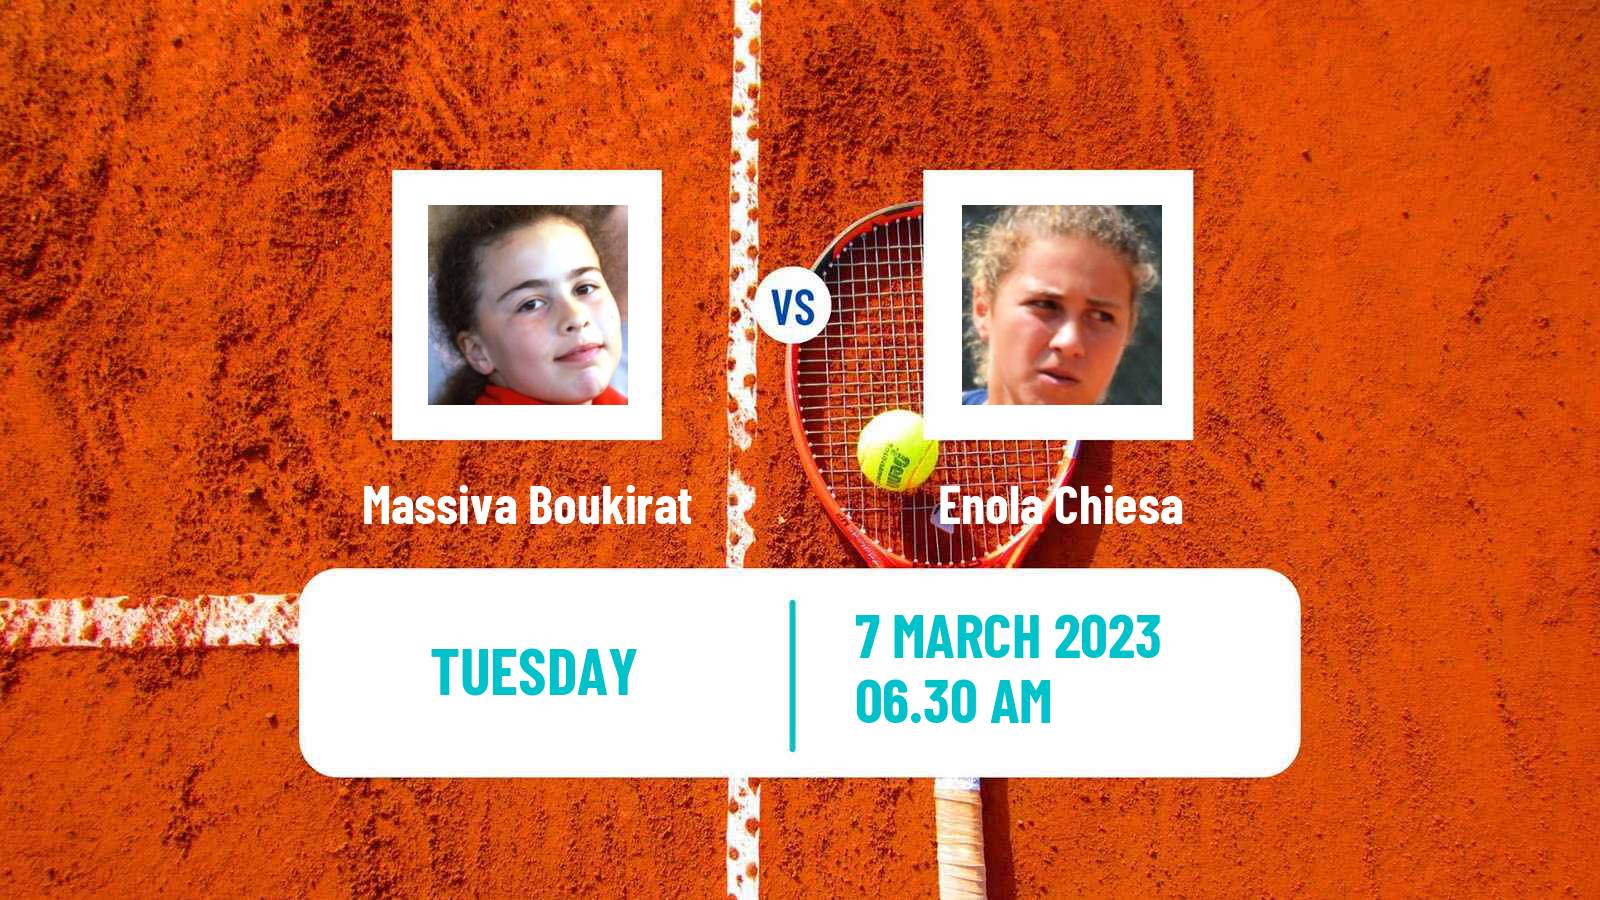 Tennis ITF Tournaments Massiva Boukirat - Enola Chiesa